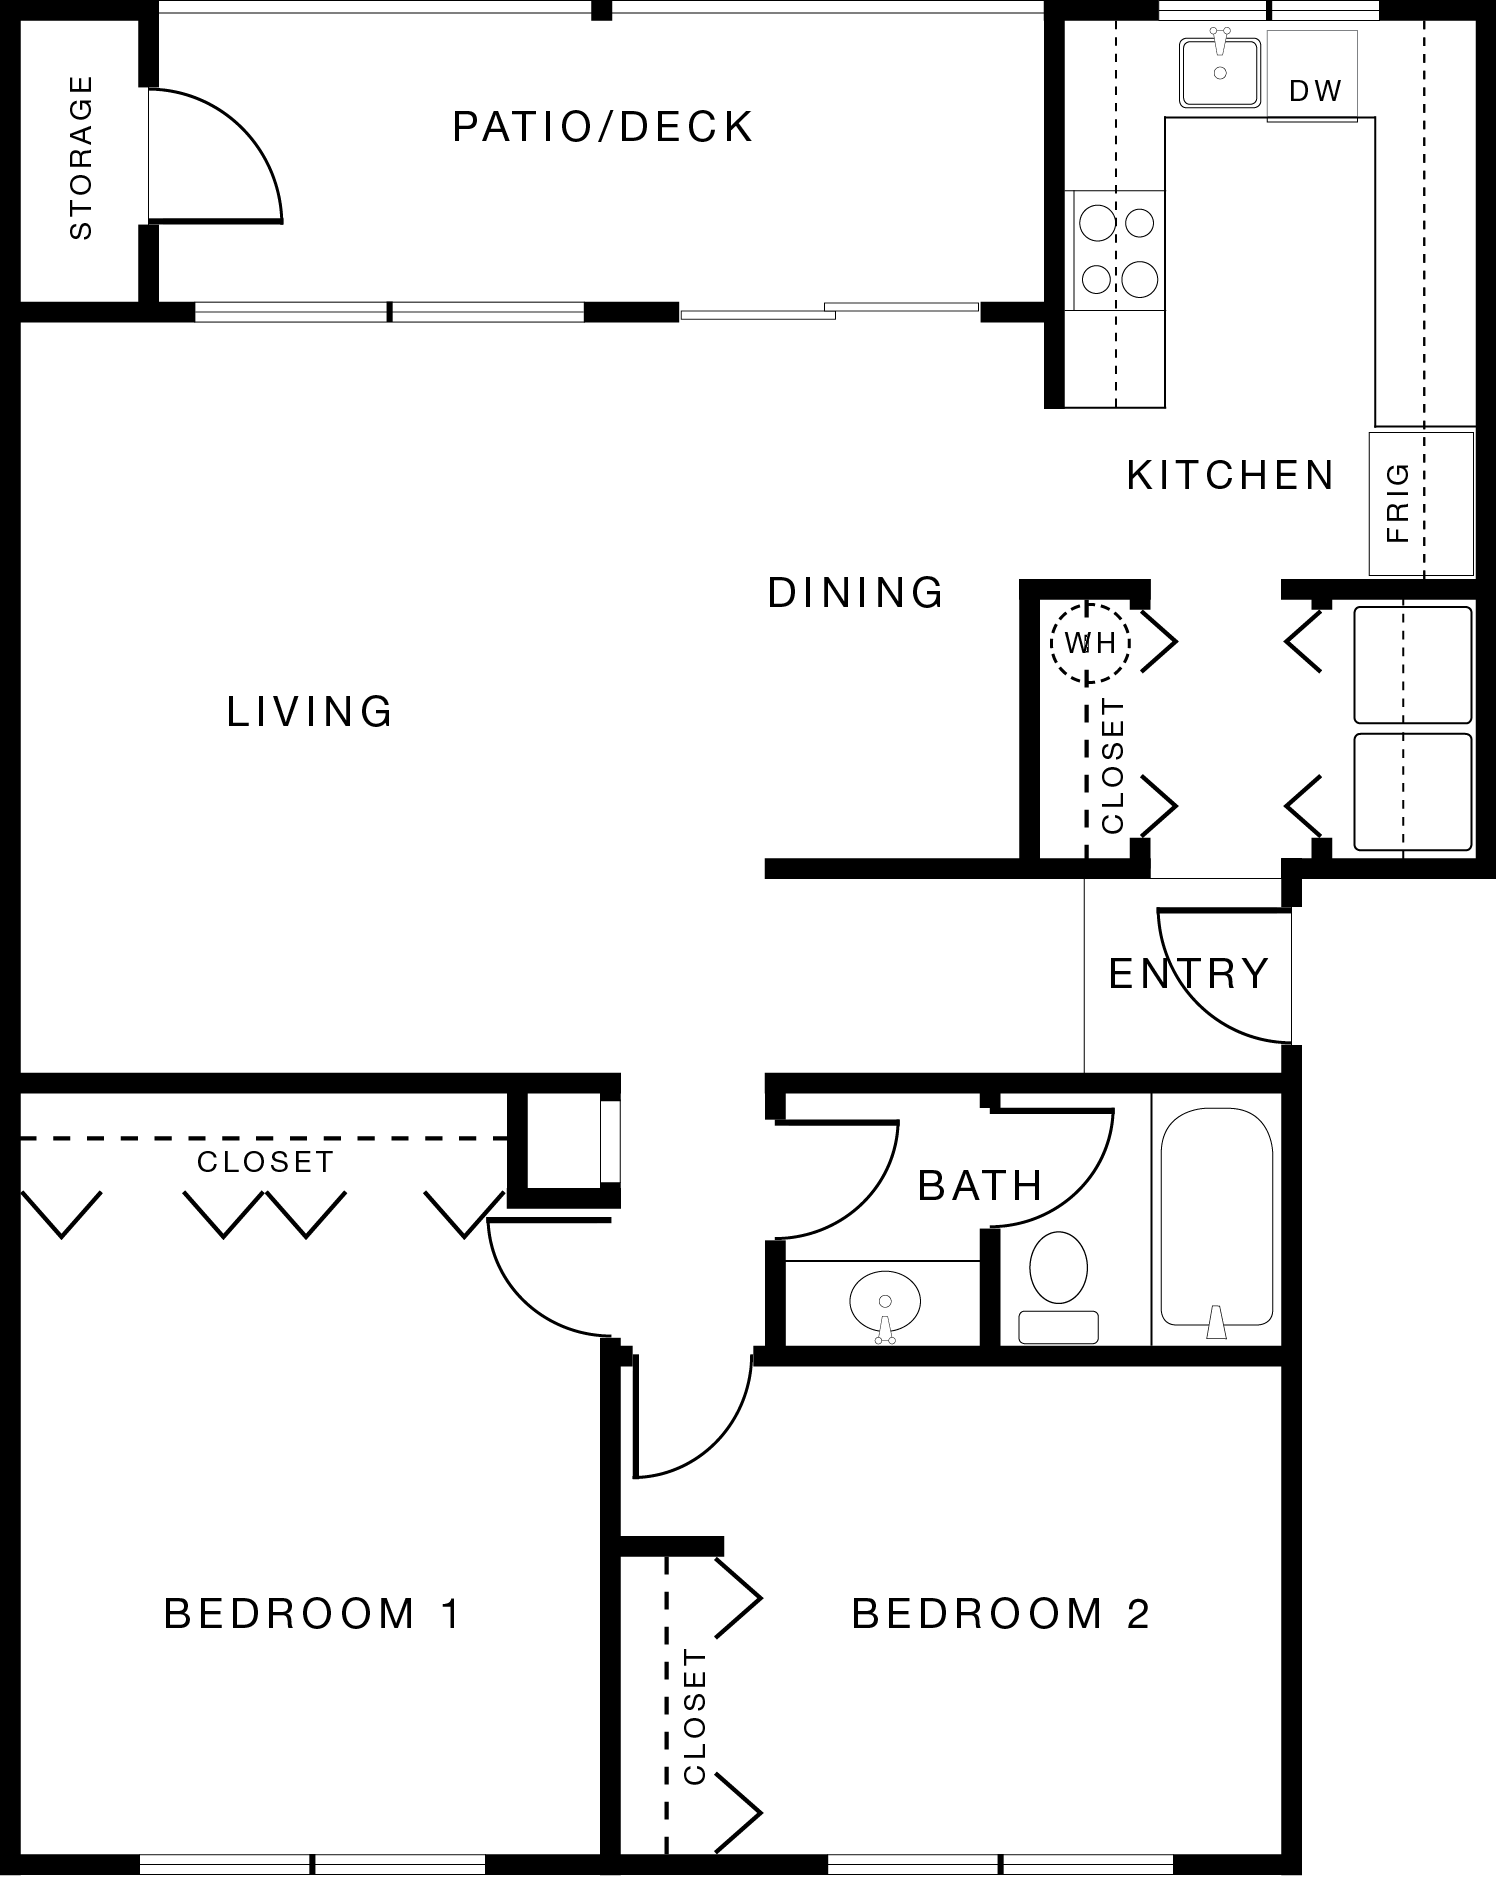 Floorplan of Chestnut Place 1 bedroom apartment.